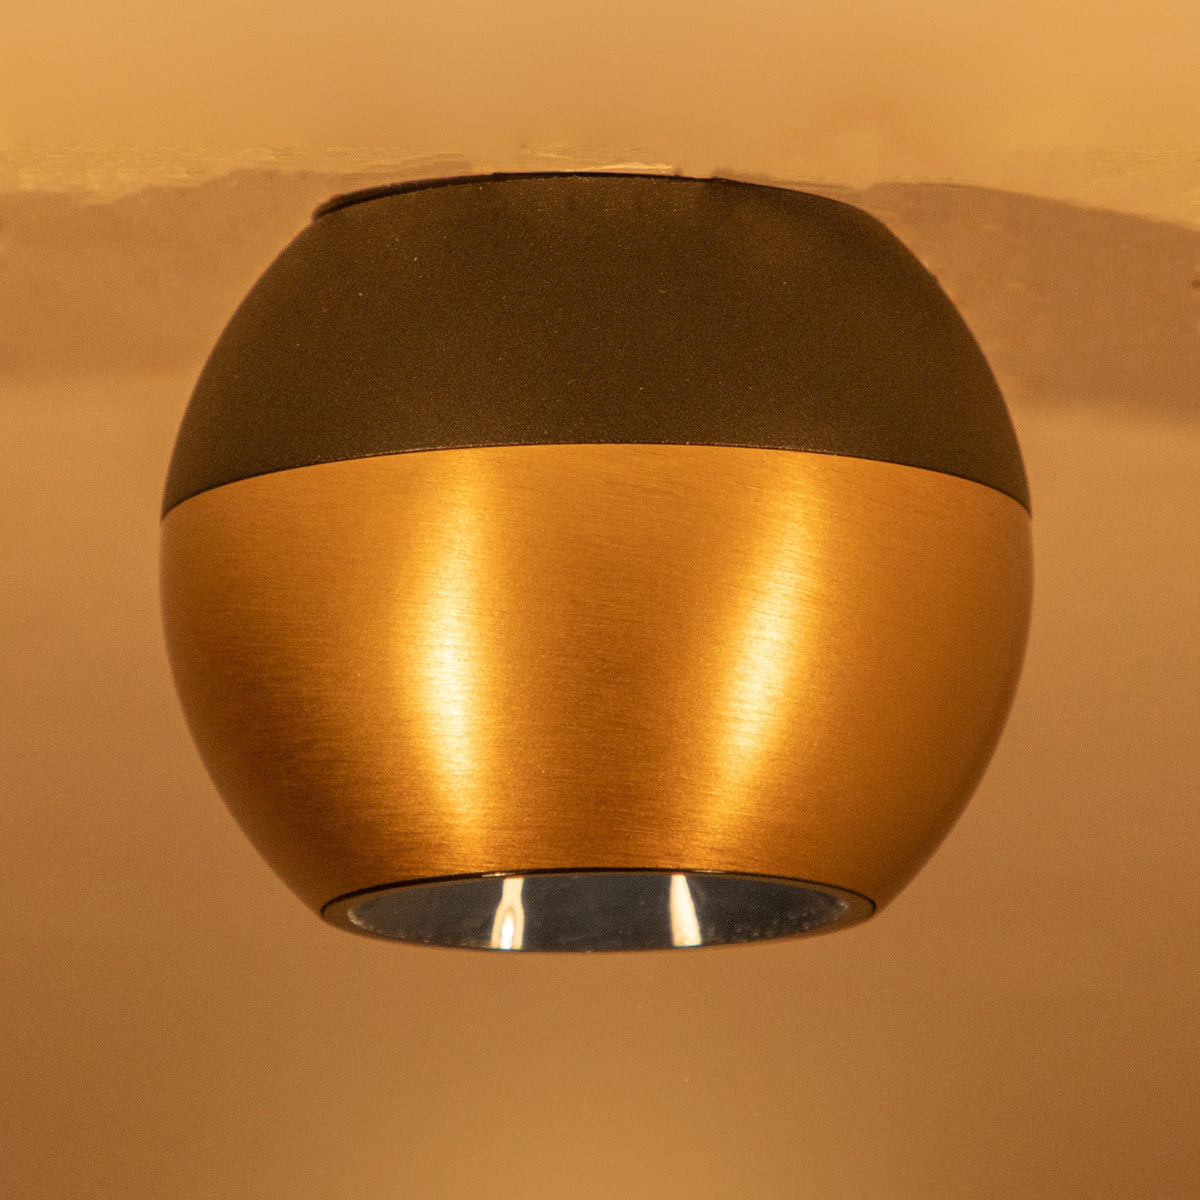 Buy NXT Black Copper LED Ceiling Light online